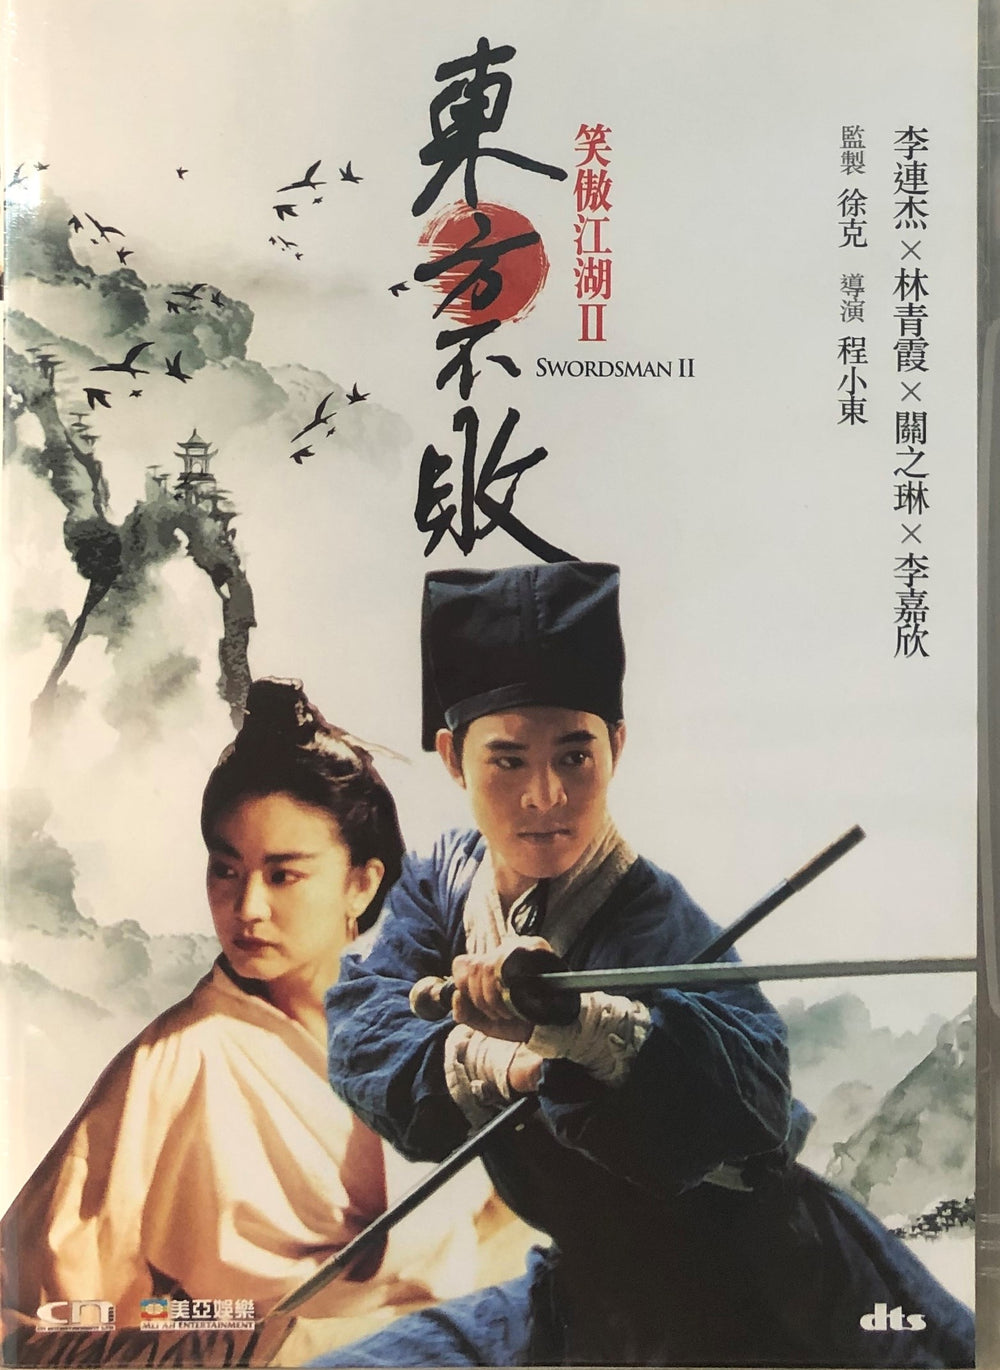 SWORDSMAN II 笑傲江湖II東方不敗 (Hong Kong Movie) DVD ENGLISH SUB (REGION FREE)